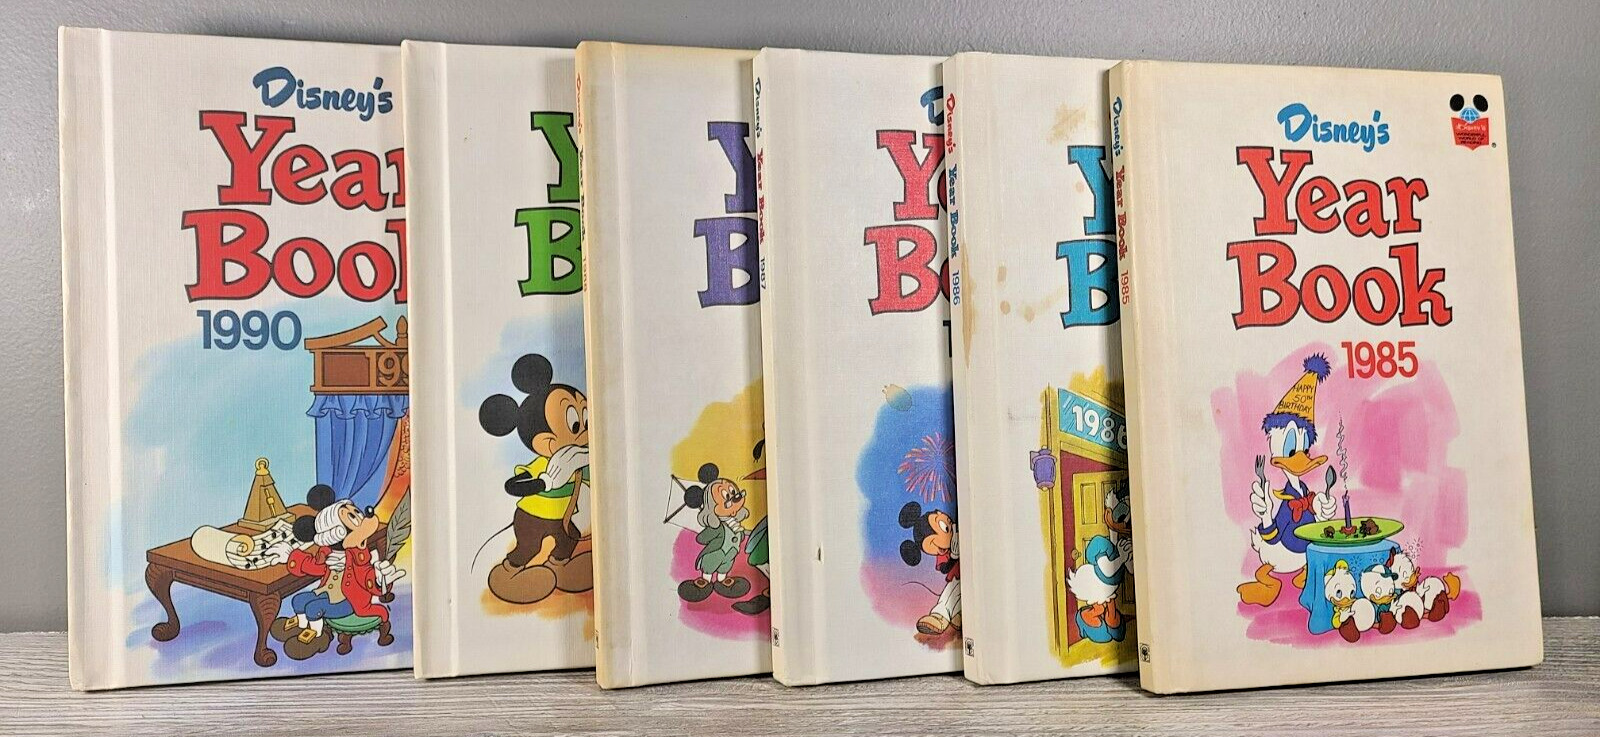 Vintage Disney's Year Book Hardcover Memorabilia 1985-1990 6 Books Total